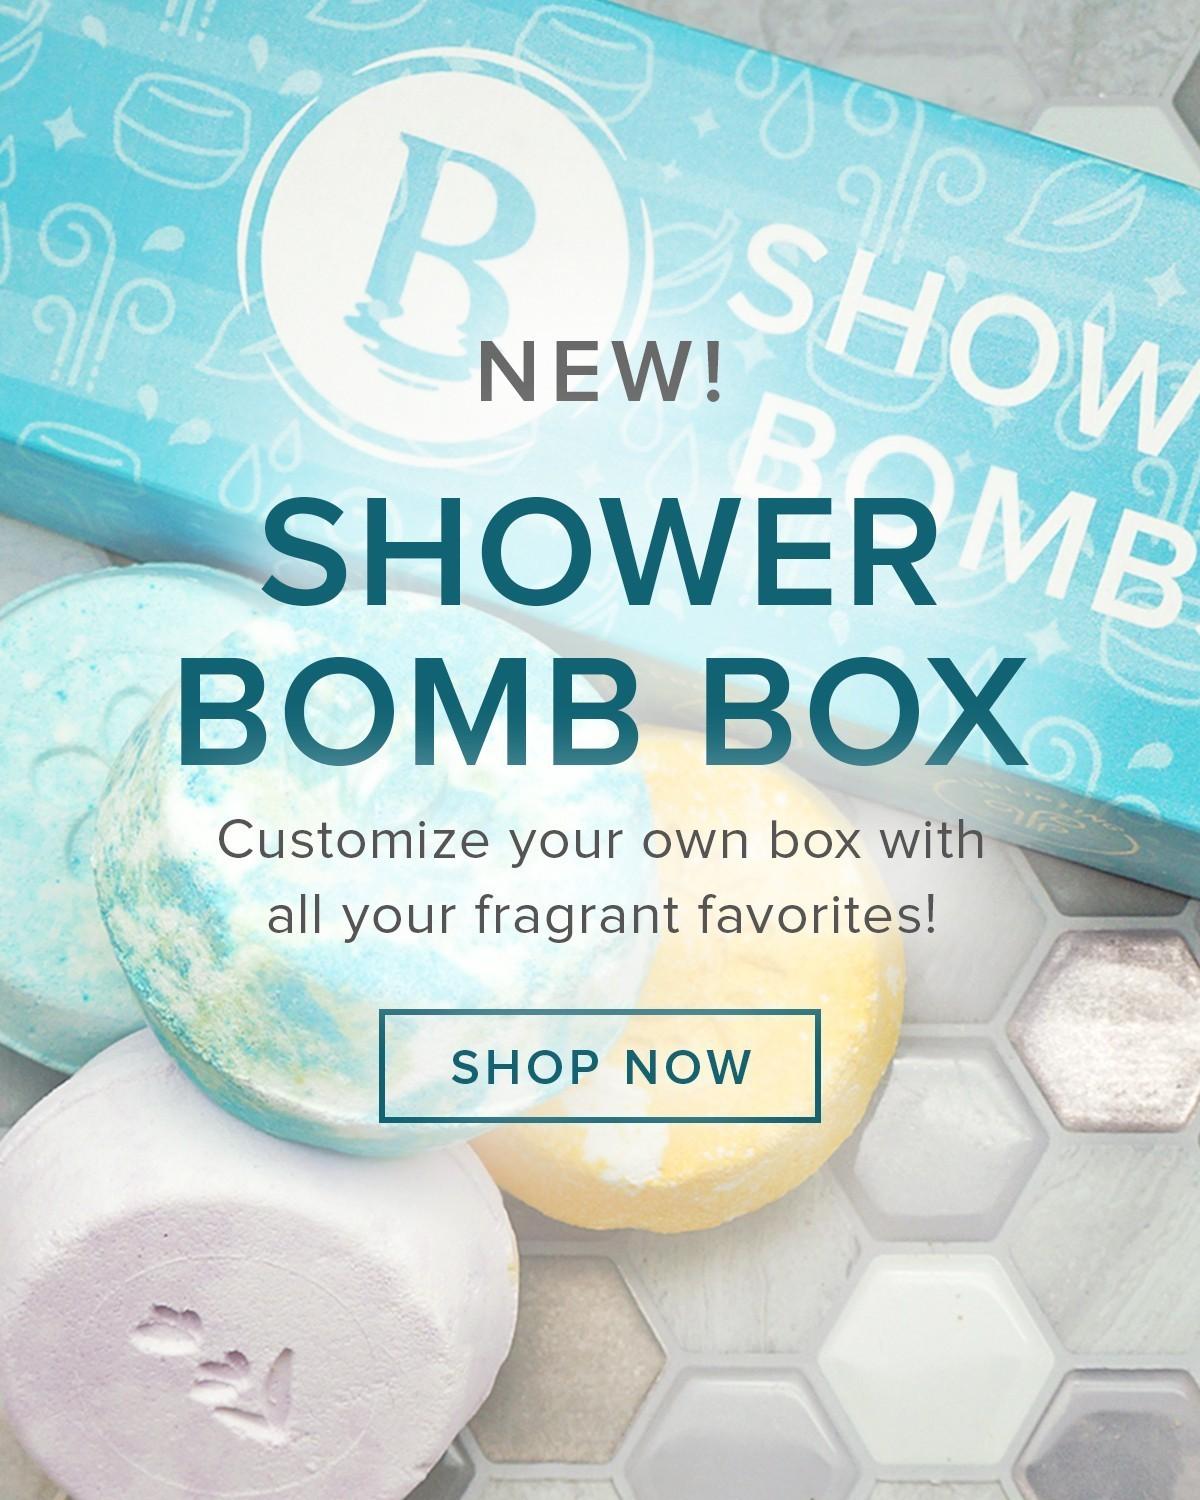 Basin Shower Bomb Box!